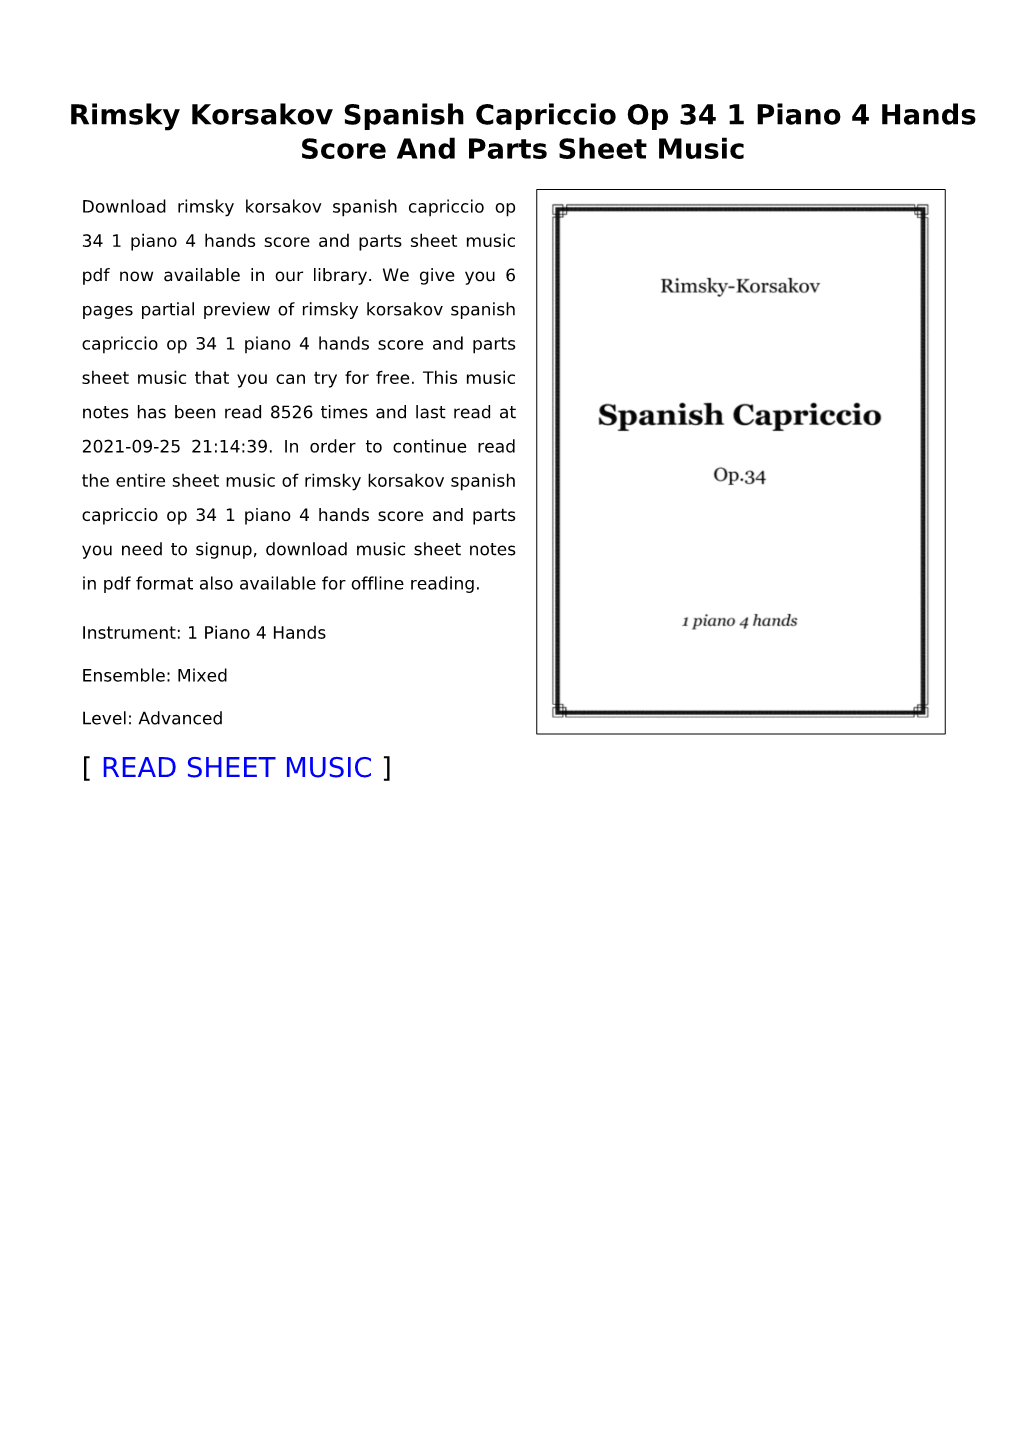 Rimsky Korsakov Spanish Capriccio Op 34 1 Piano 4 Hands Score and Parts Sheet Music